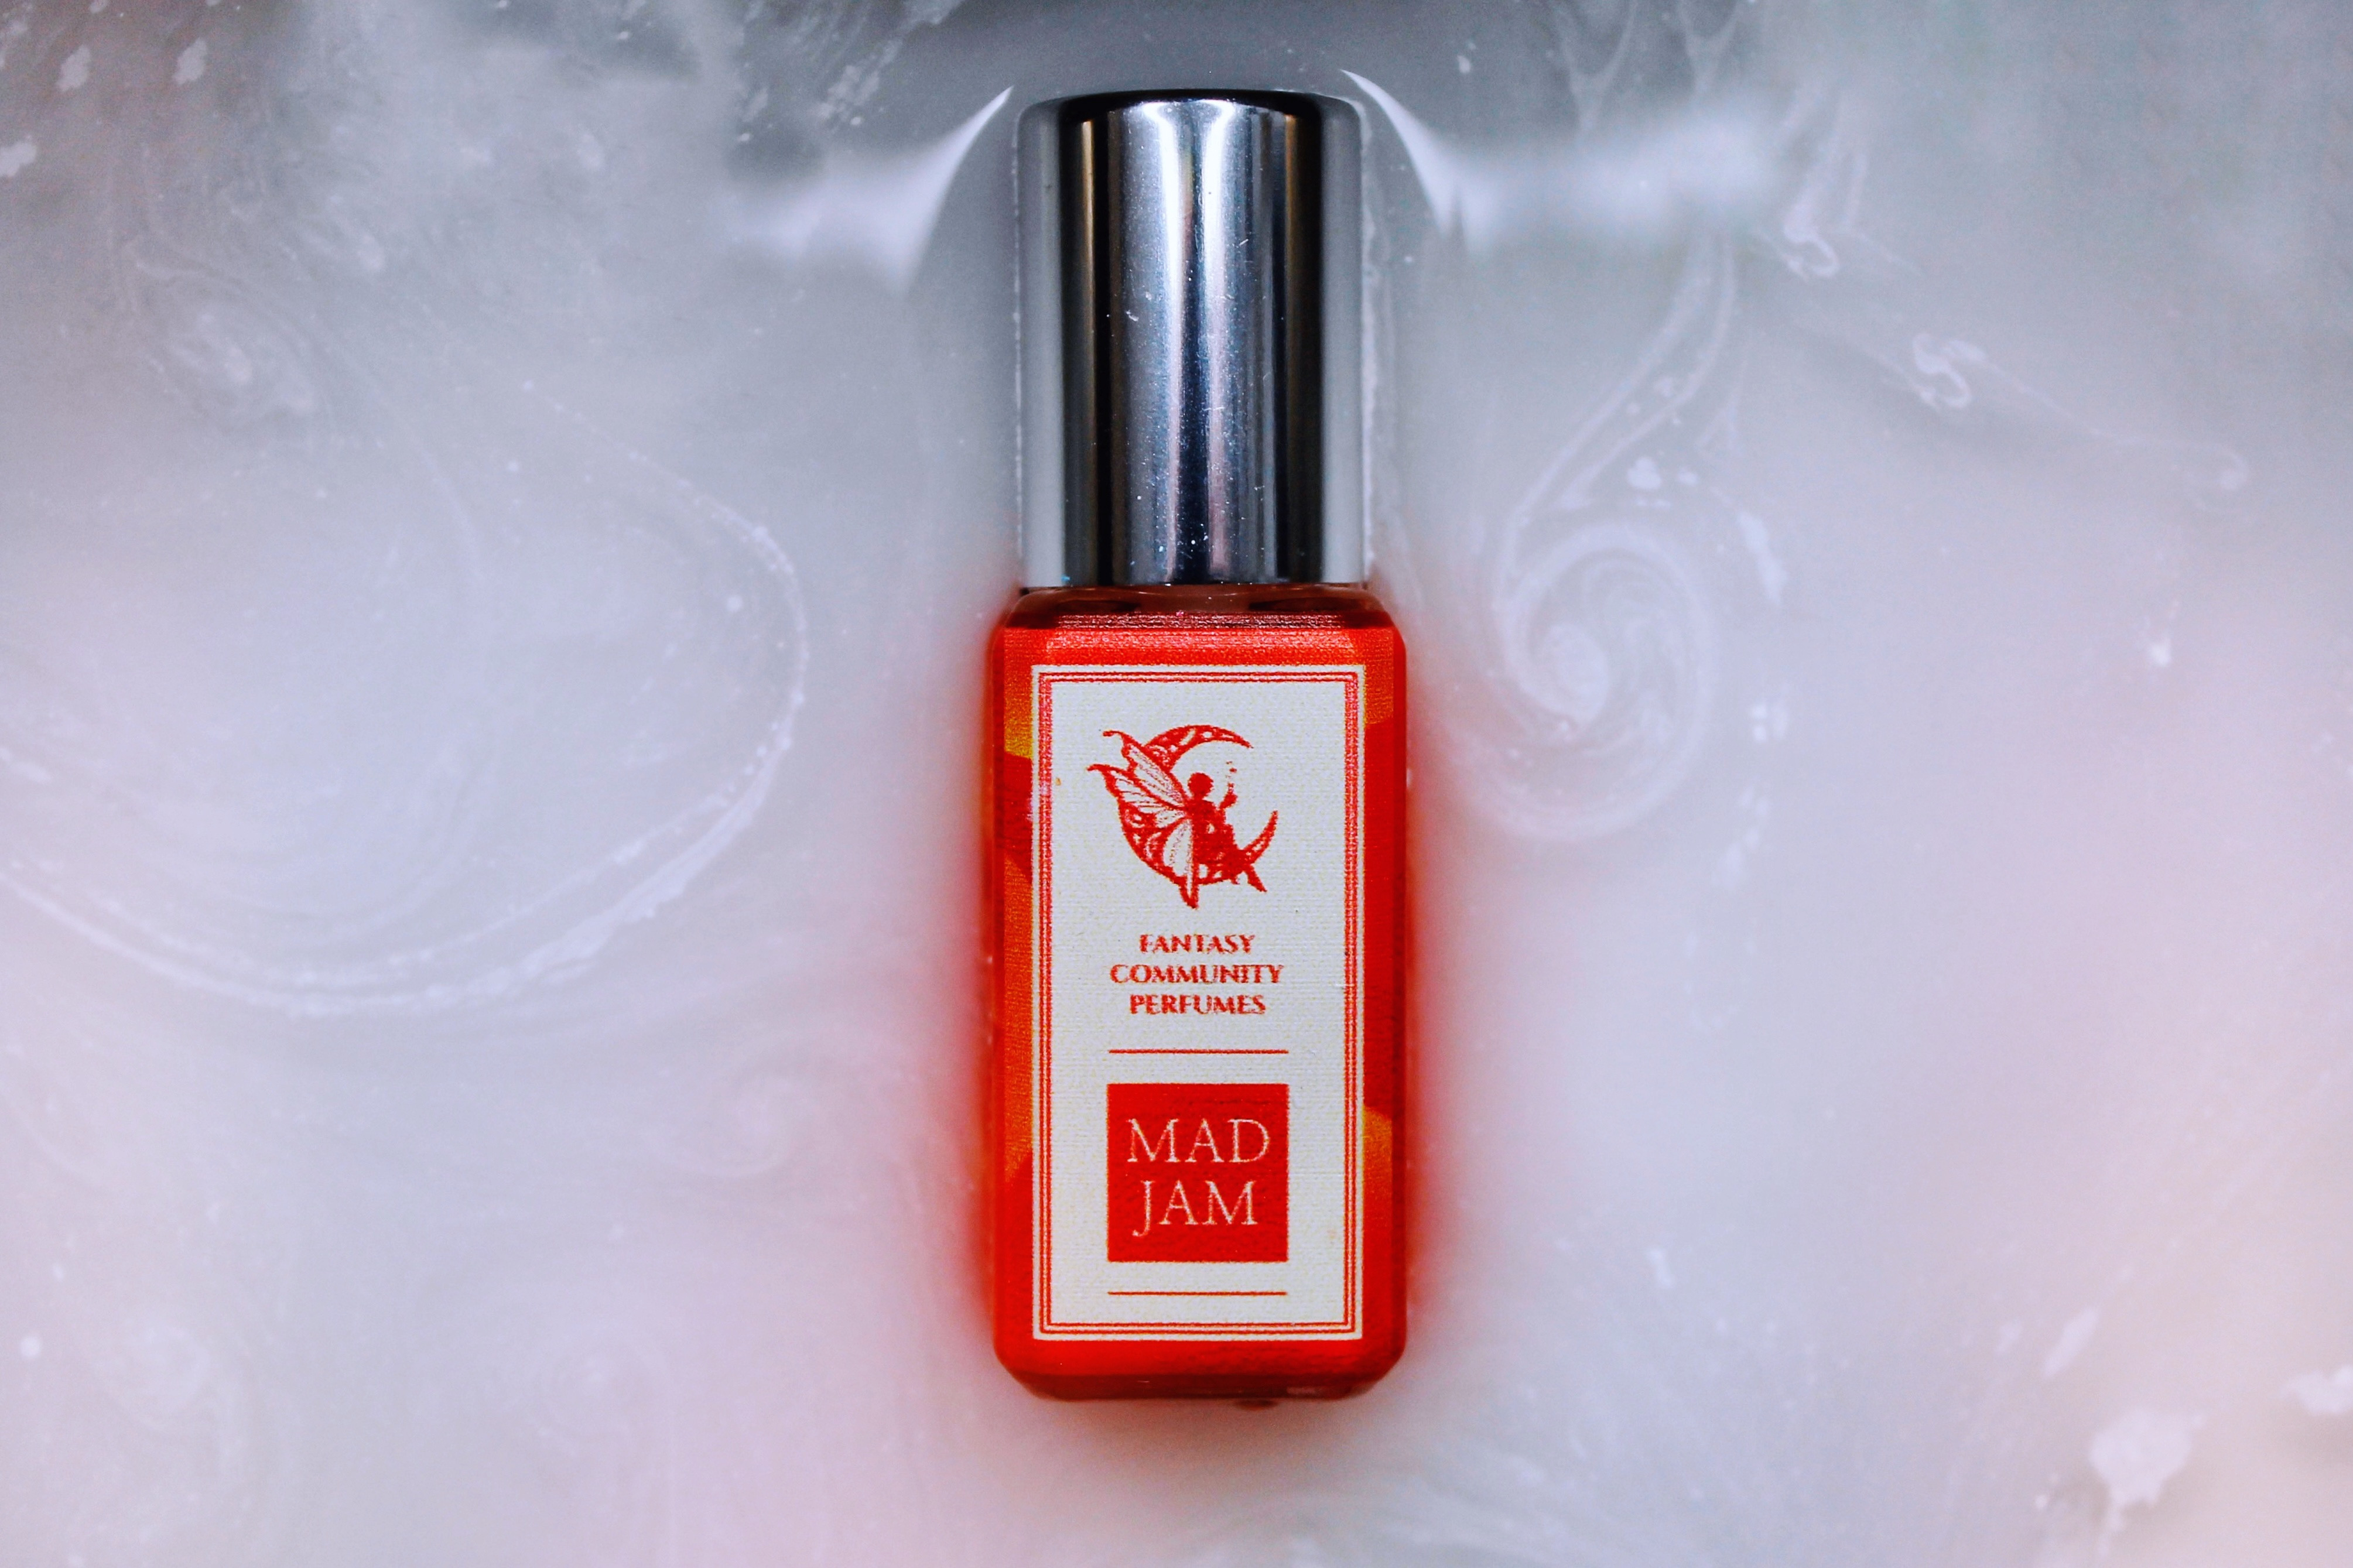 Mad Jam 🧁 Fantasy Community perfumes